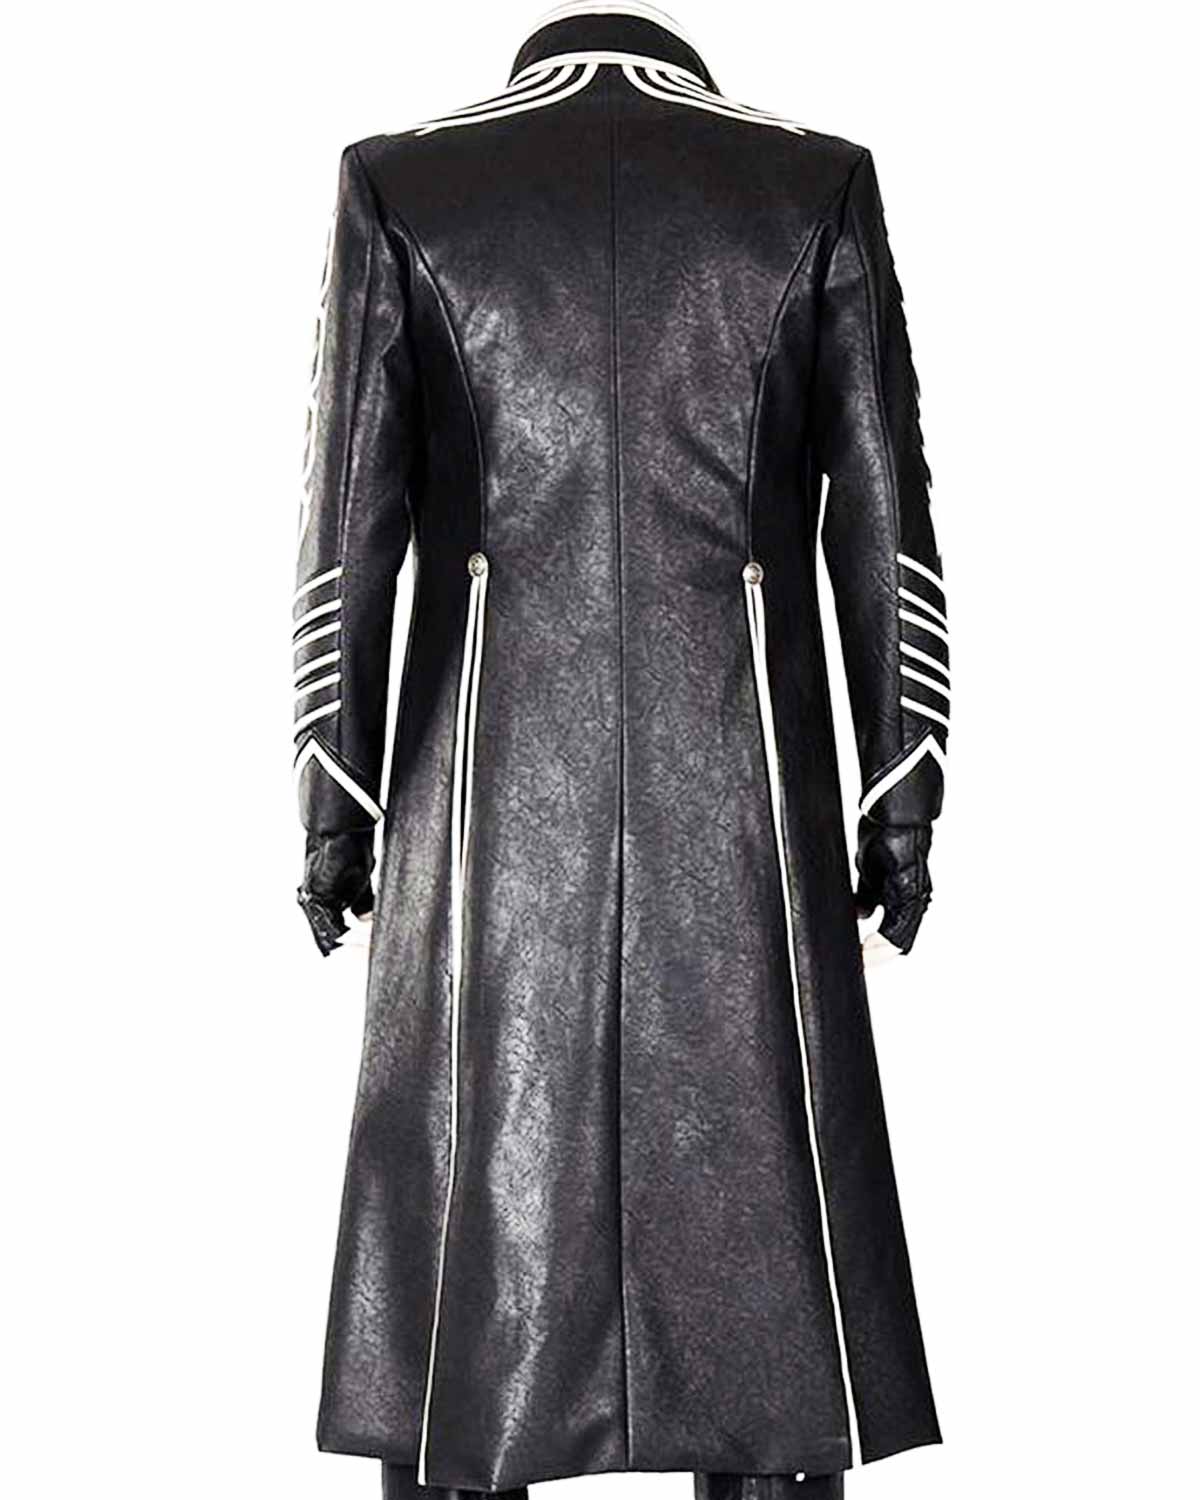 Devil May Cry 5 Game Vergil Black Leather Coat | Elite Jacket